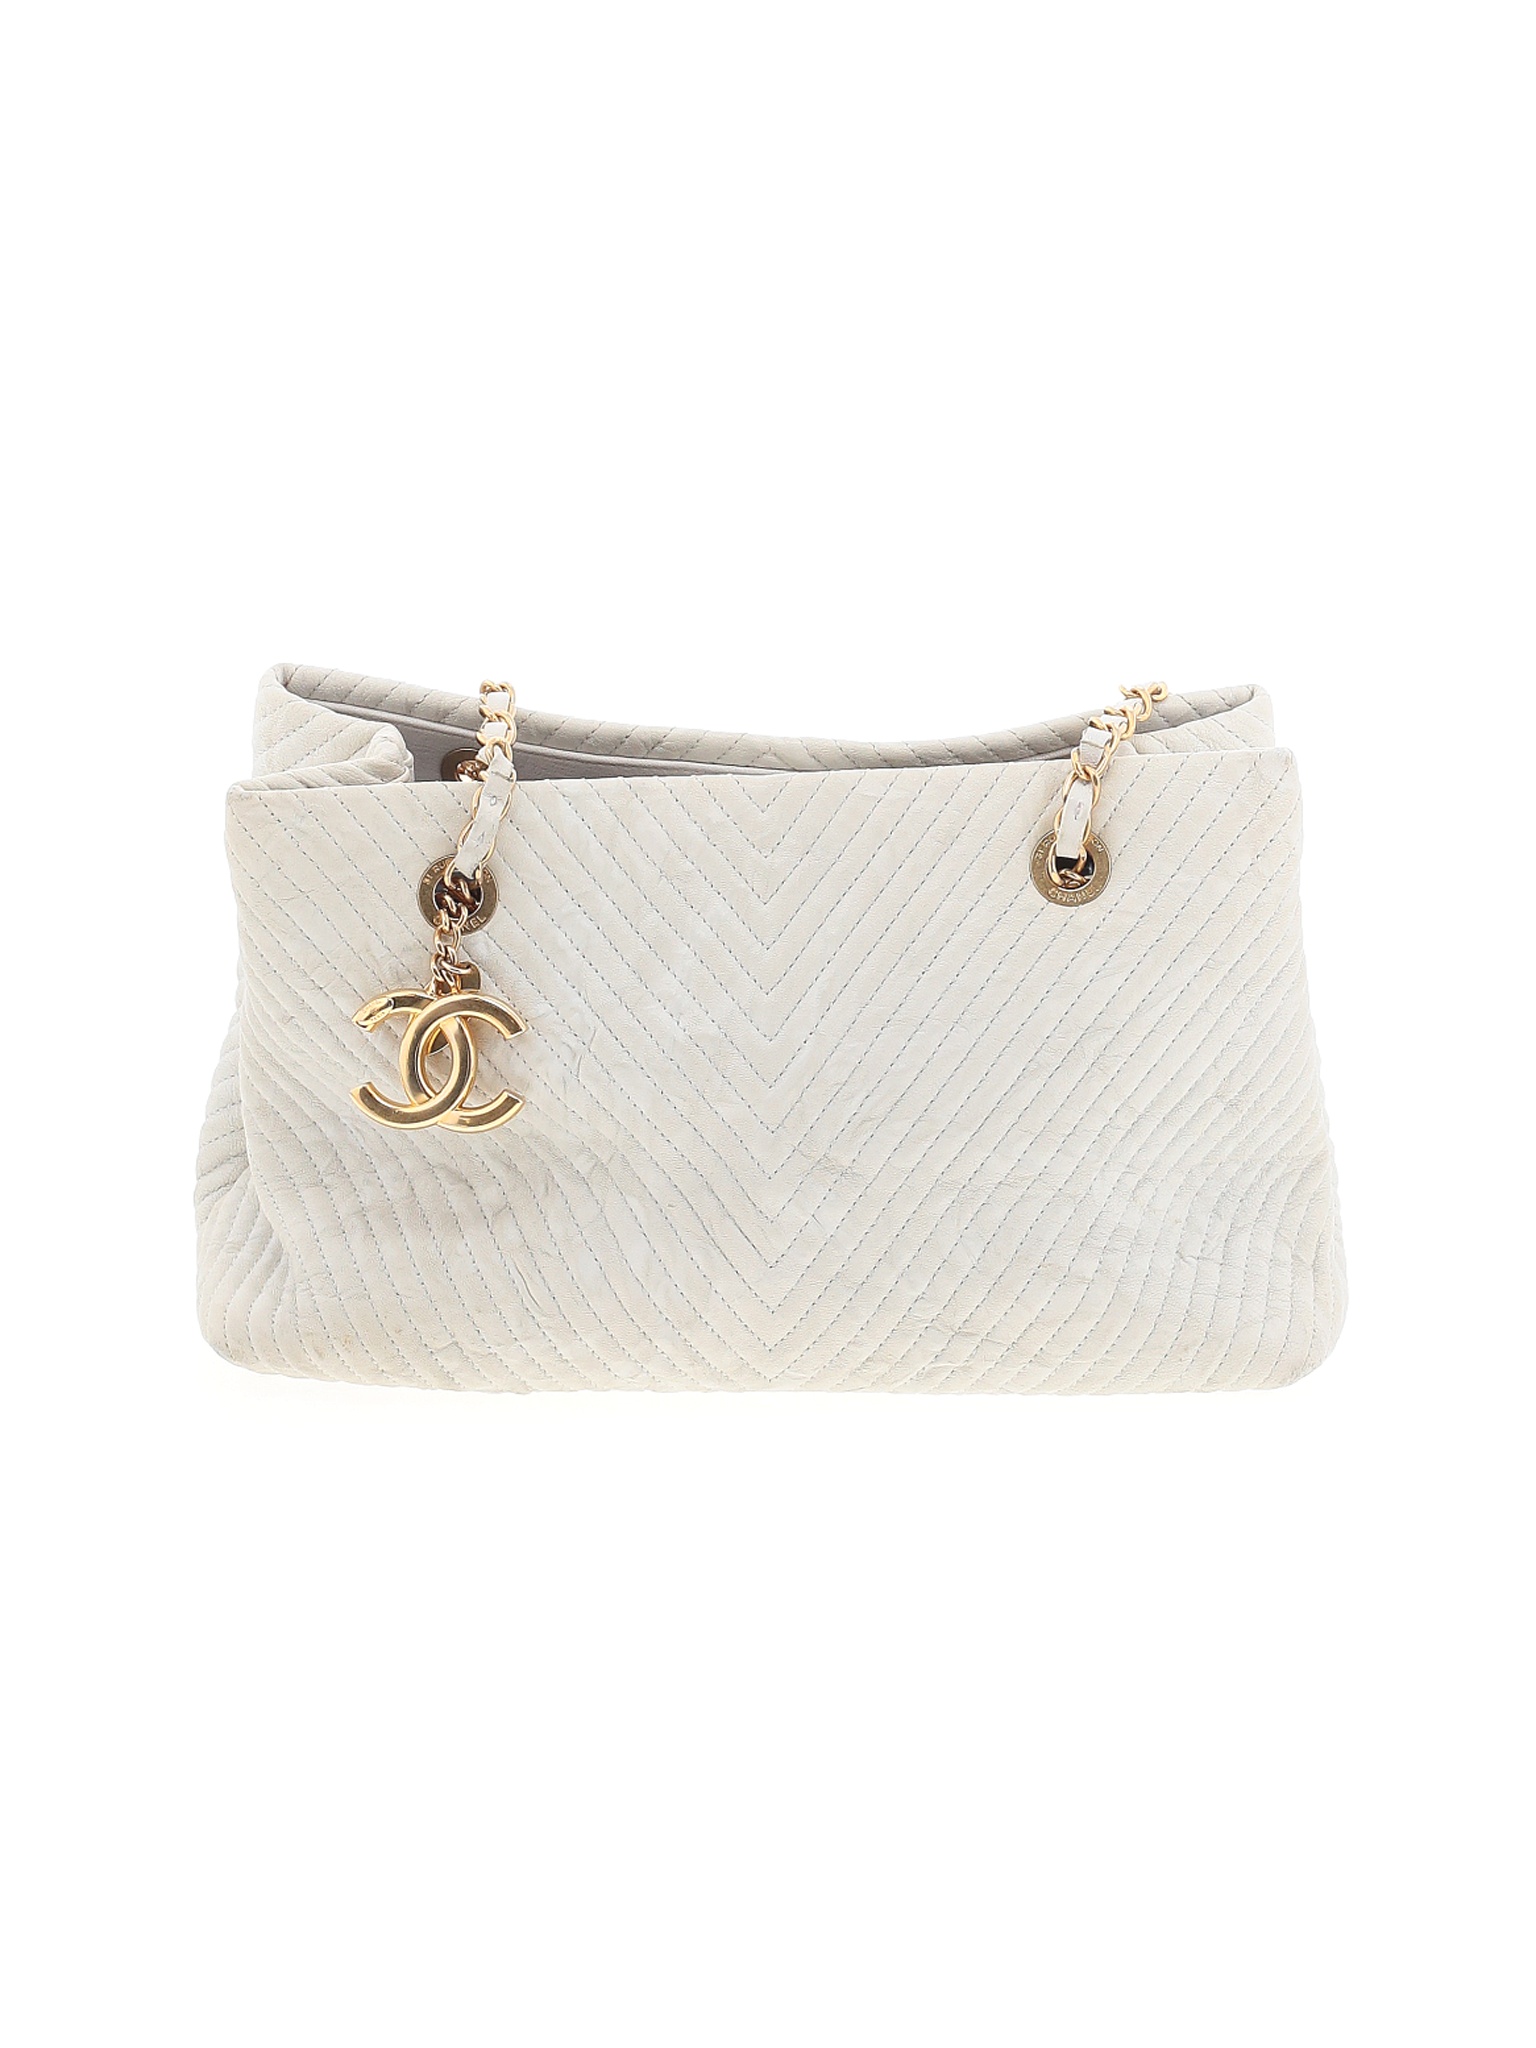 Chanel Women Ivory Leather Shoulder Bag One Size | eBay